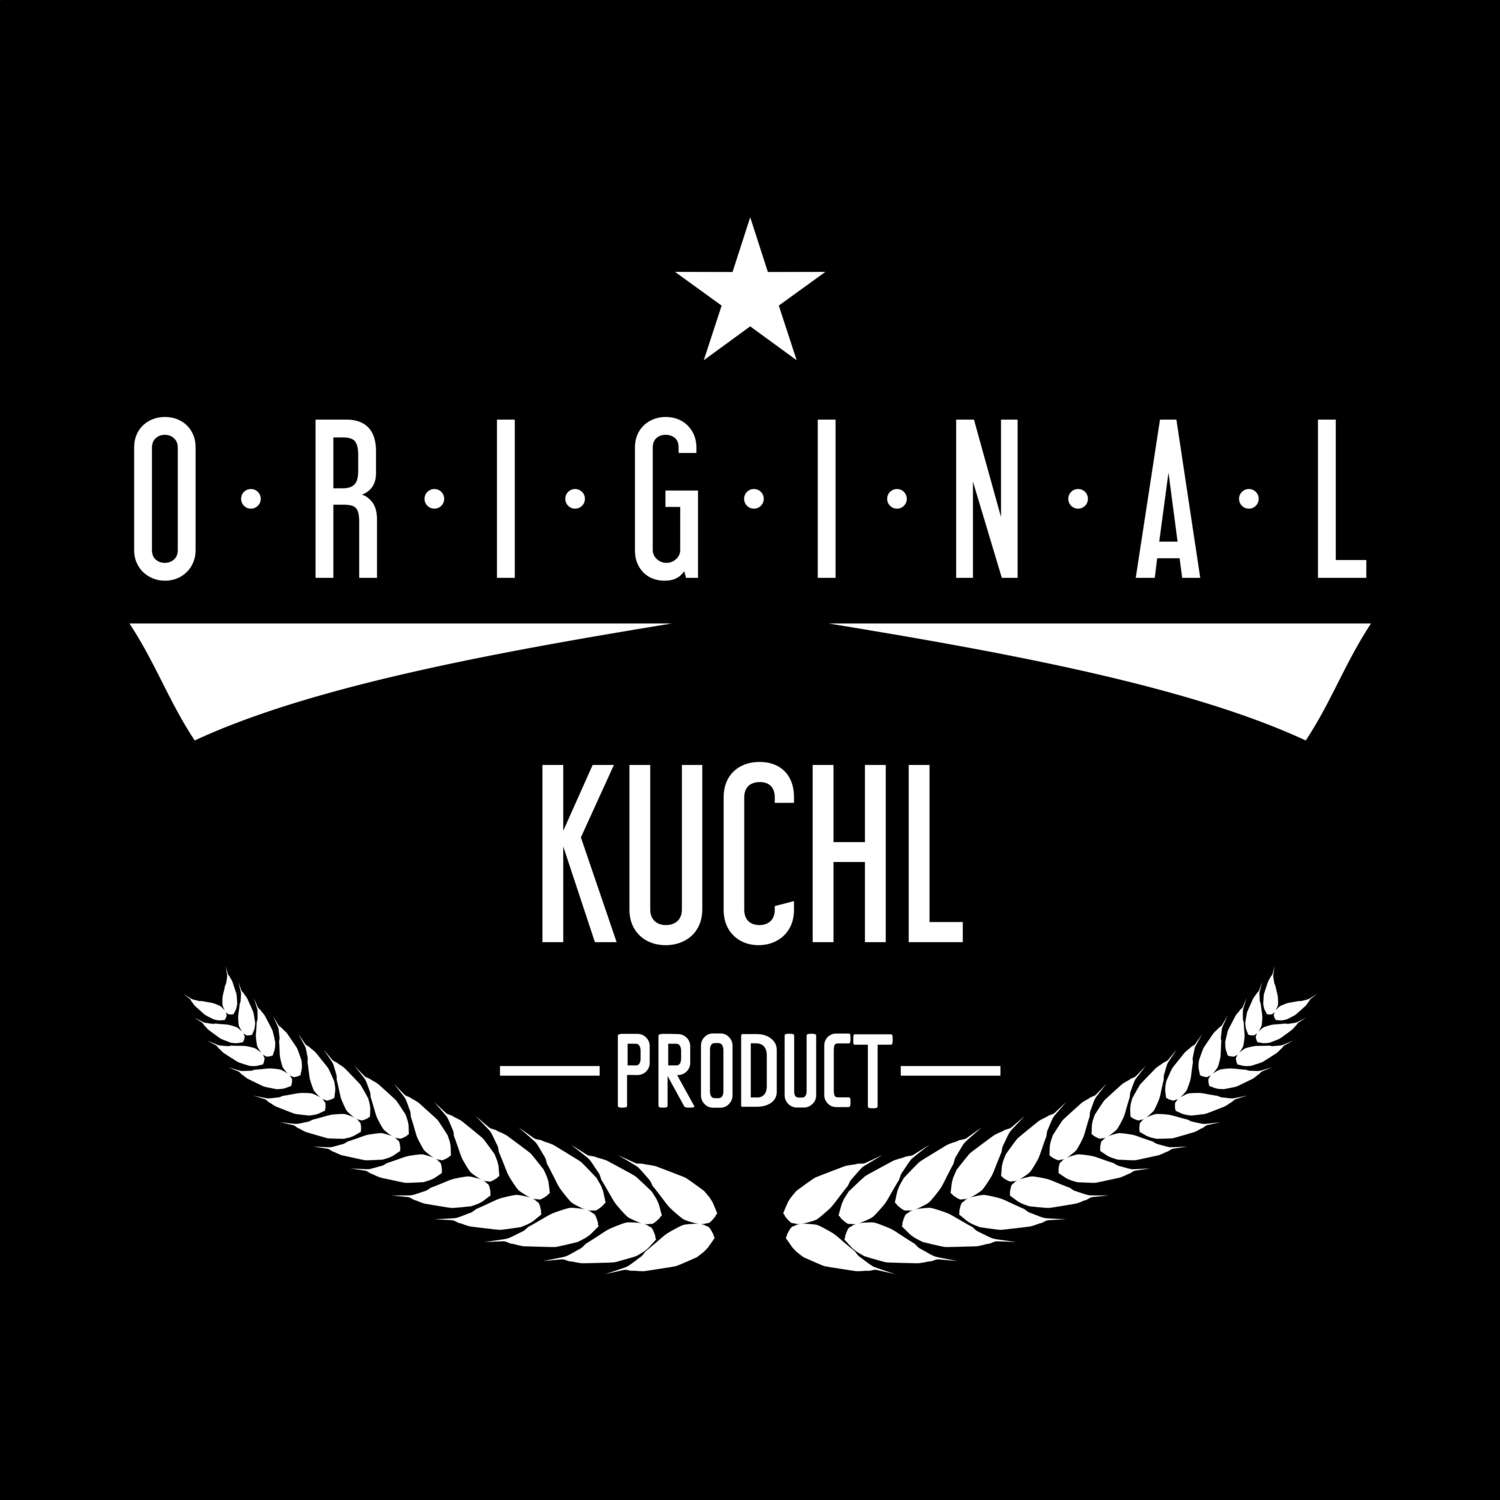 Kuchl T-Shirt »Original Product«